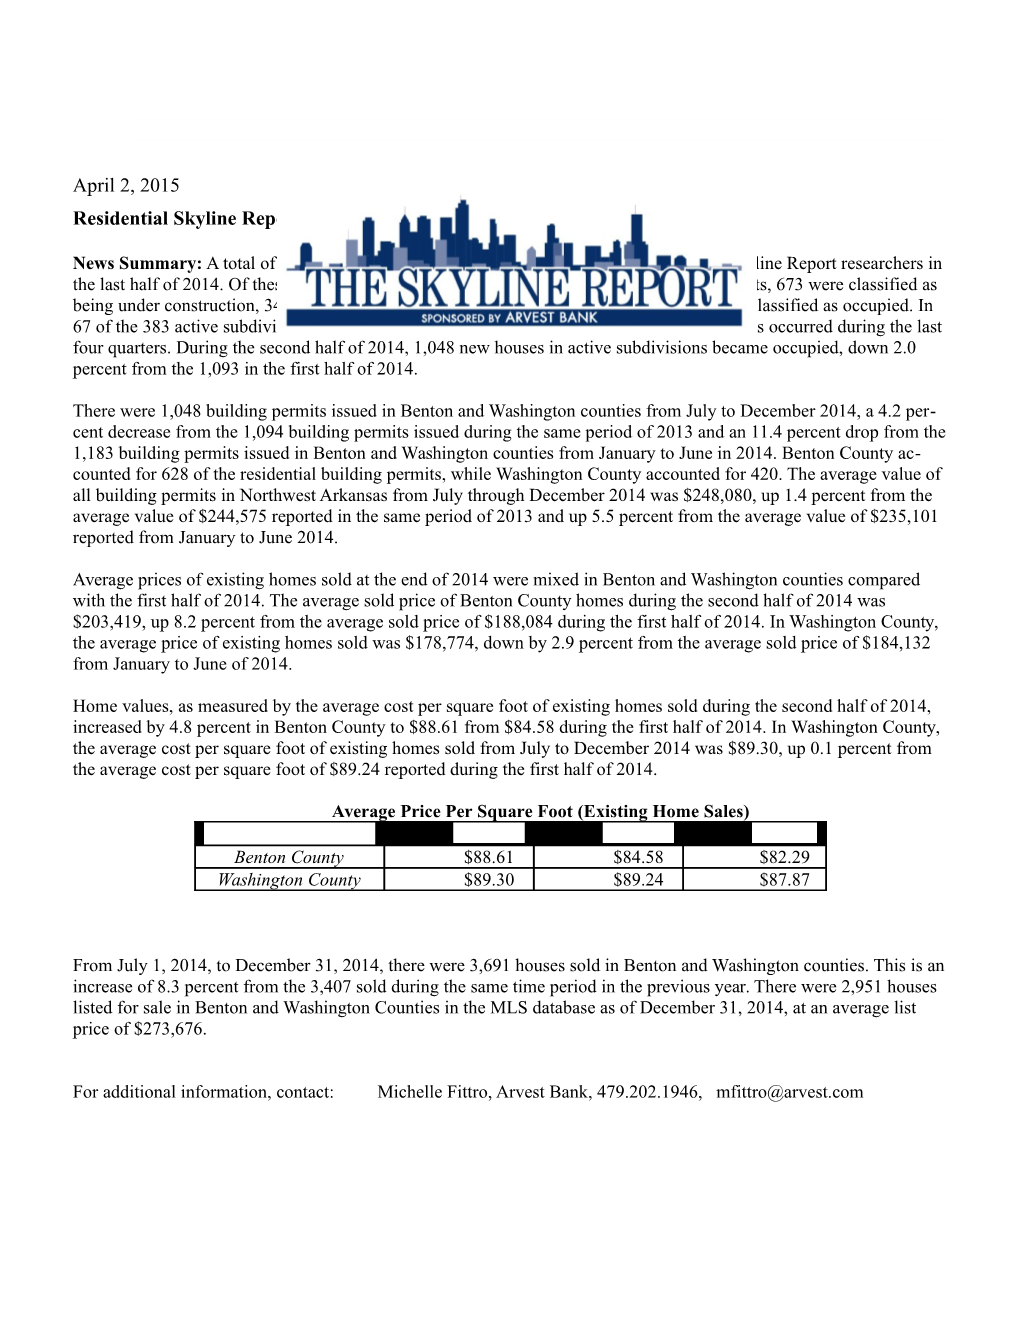 Residential Skyline Report Second Half, 2014